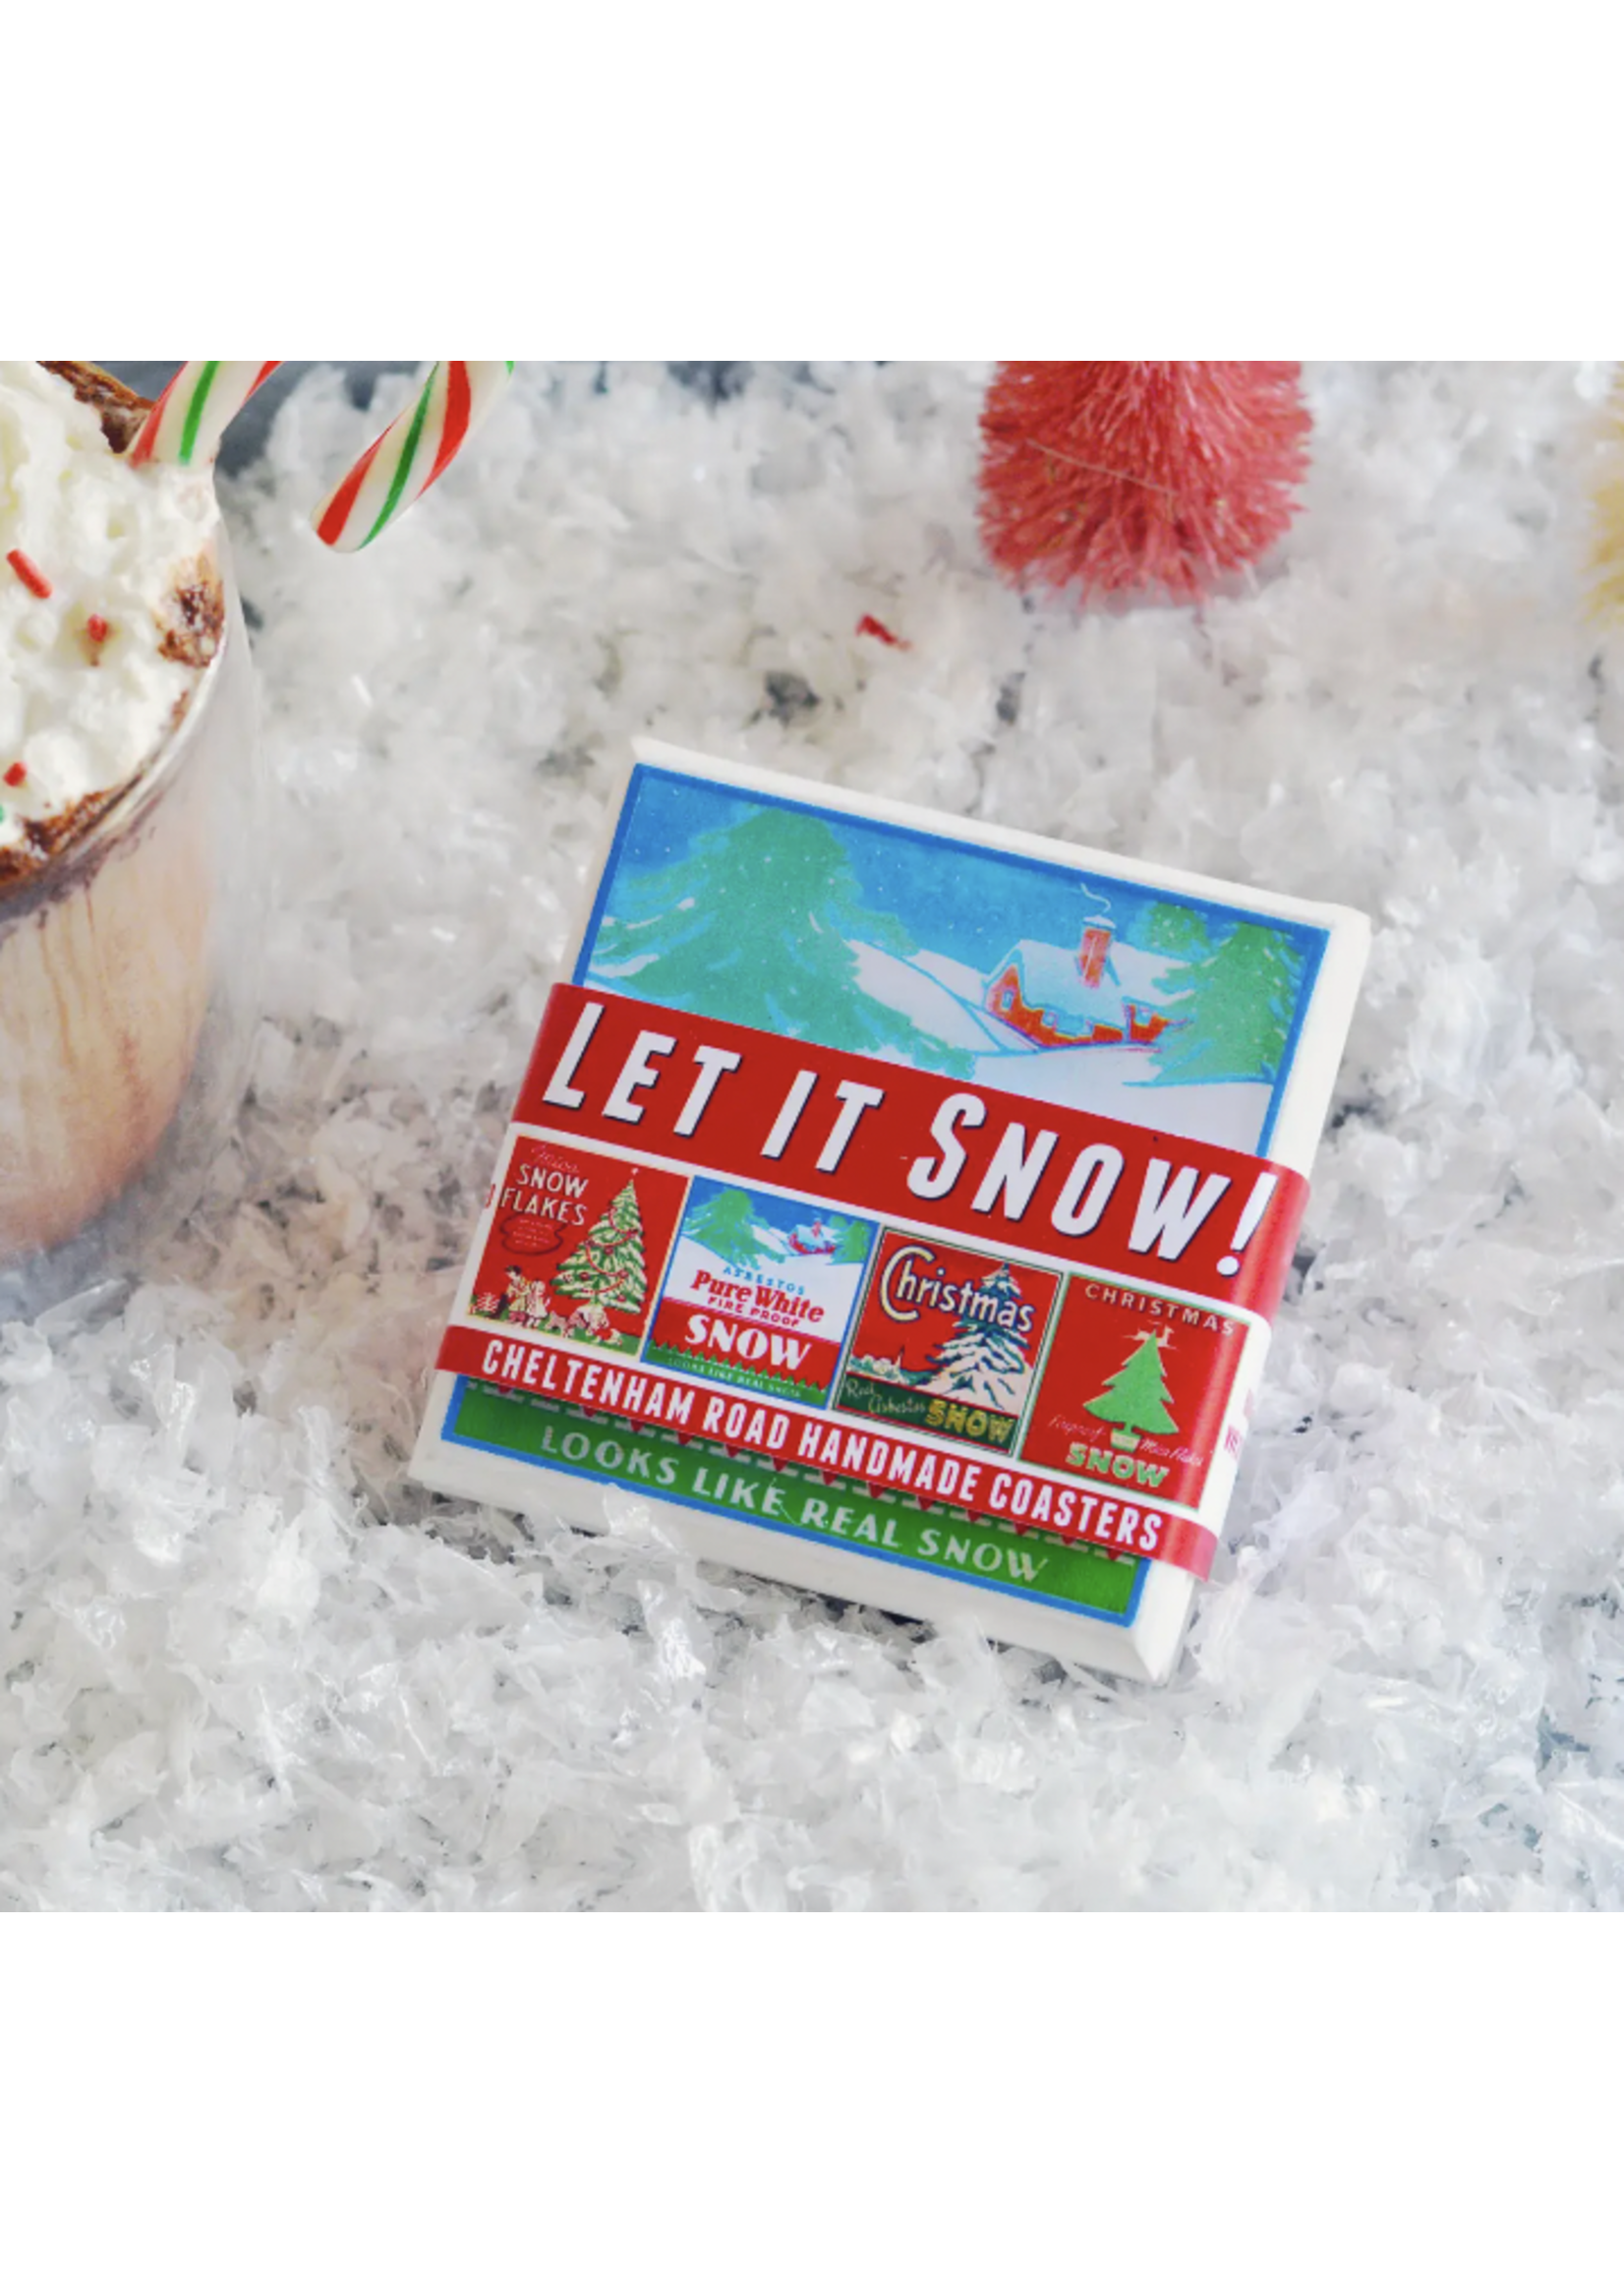 Cheltenham Road Vintage Christmas Coaster set - Let it Snow